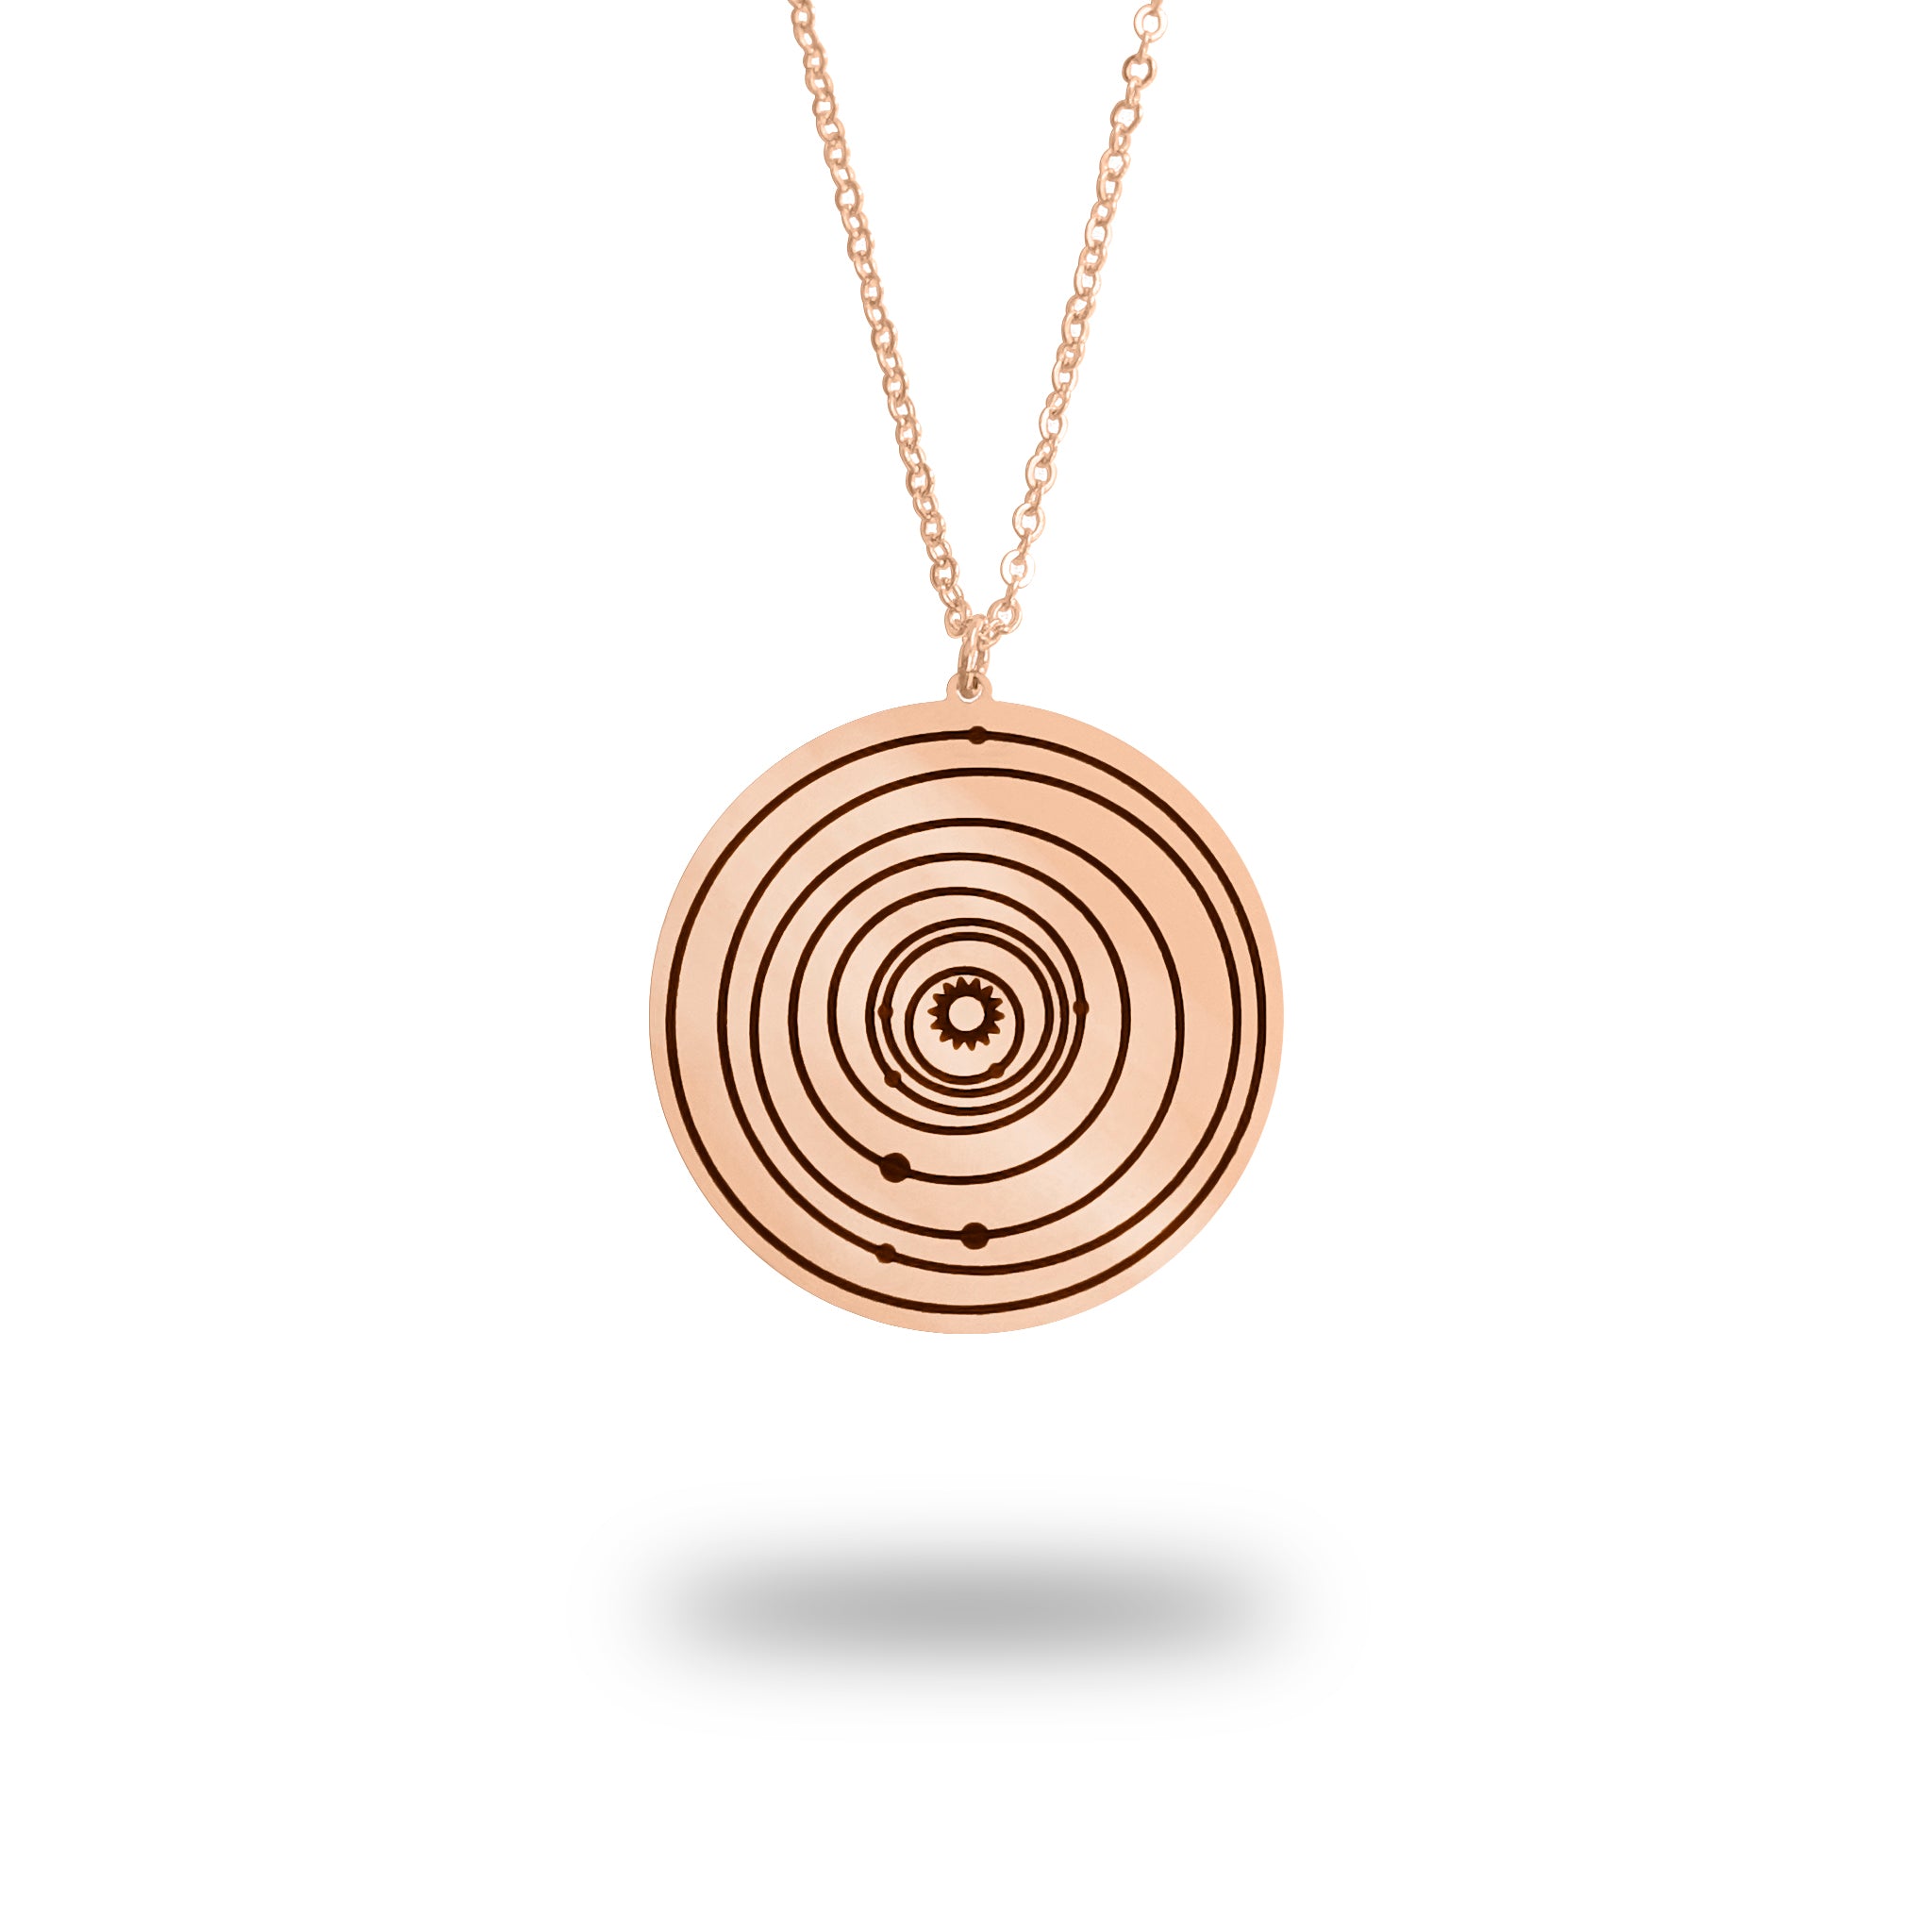 Custom Solar System Necklace in Rose Gold Filled